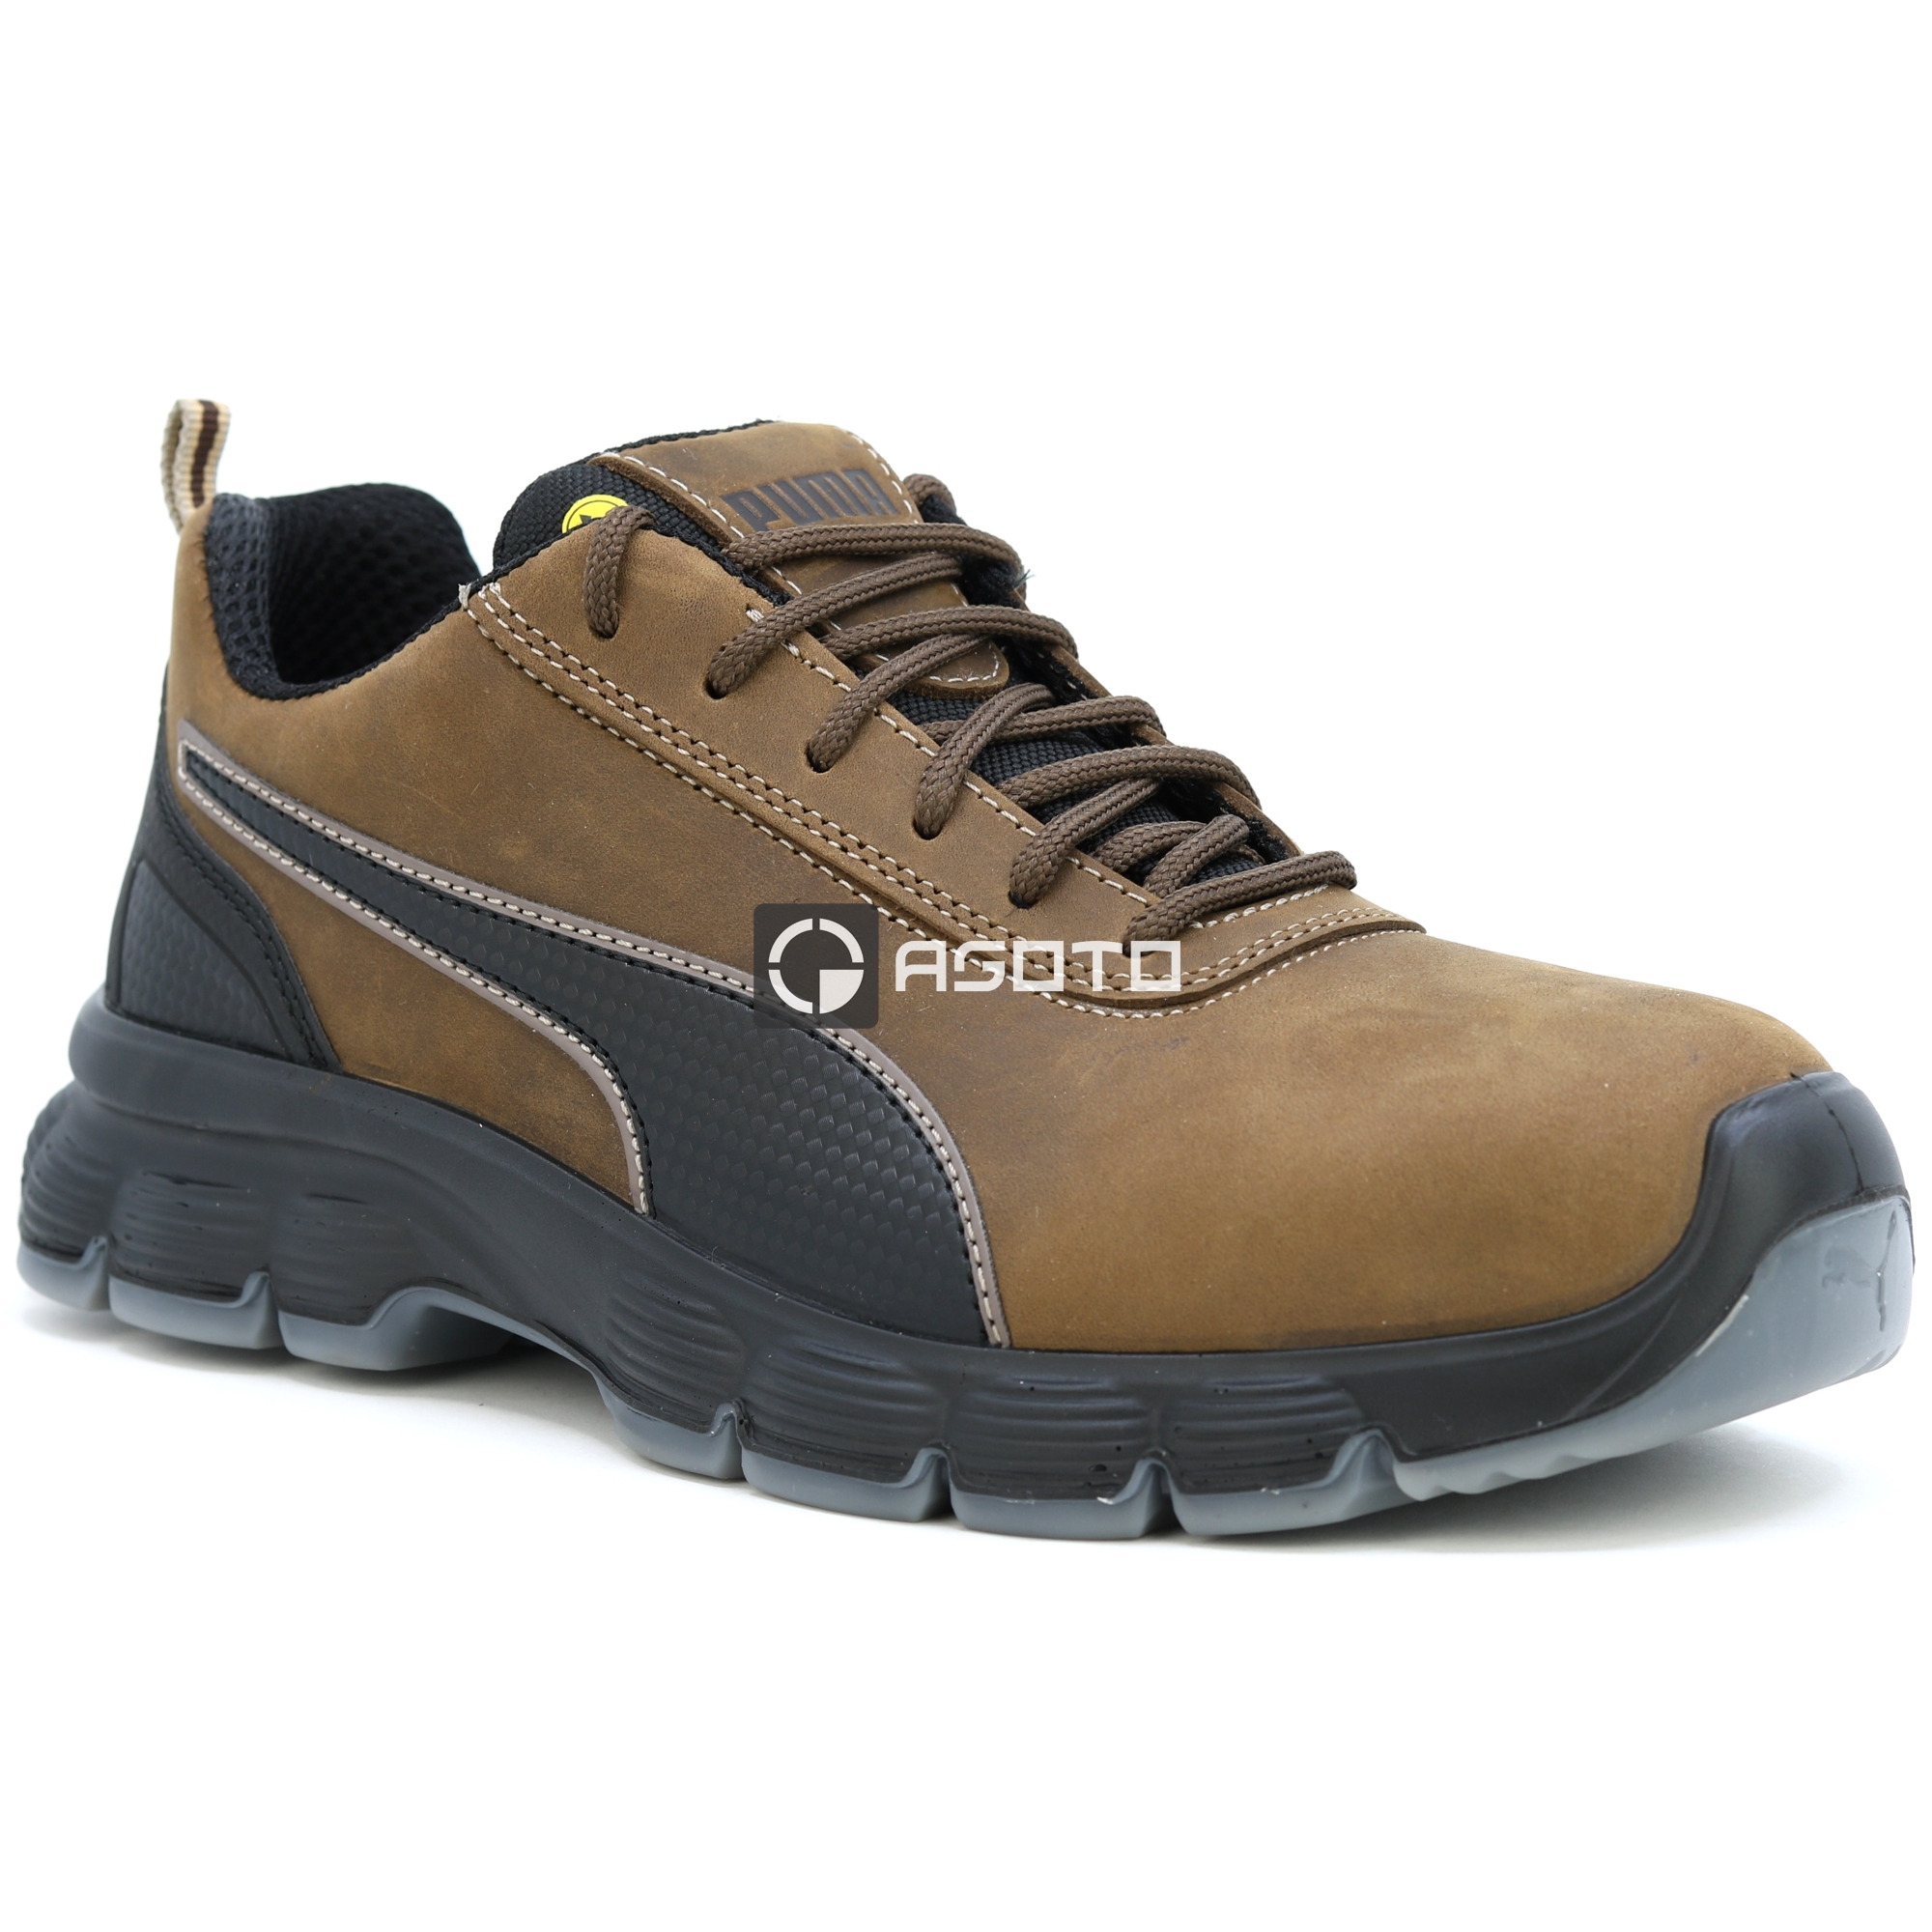 Condor low shoes ESD PUMA Safety S3